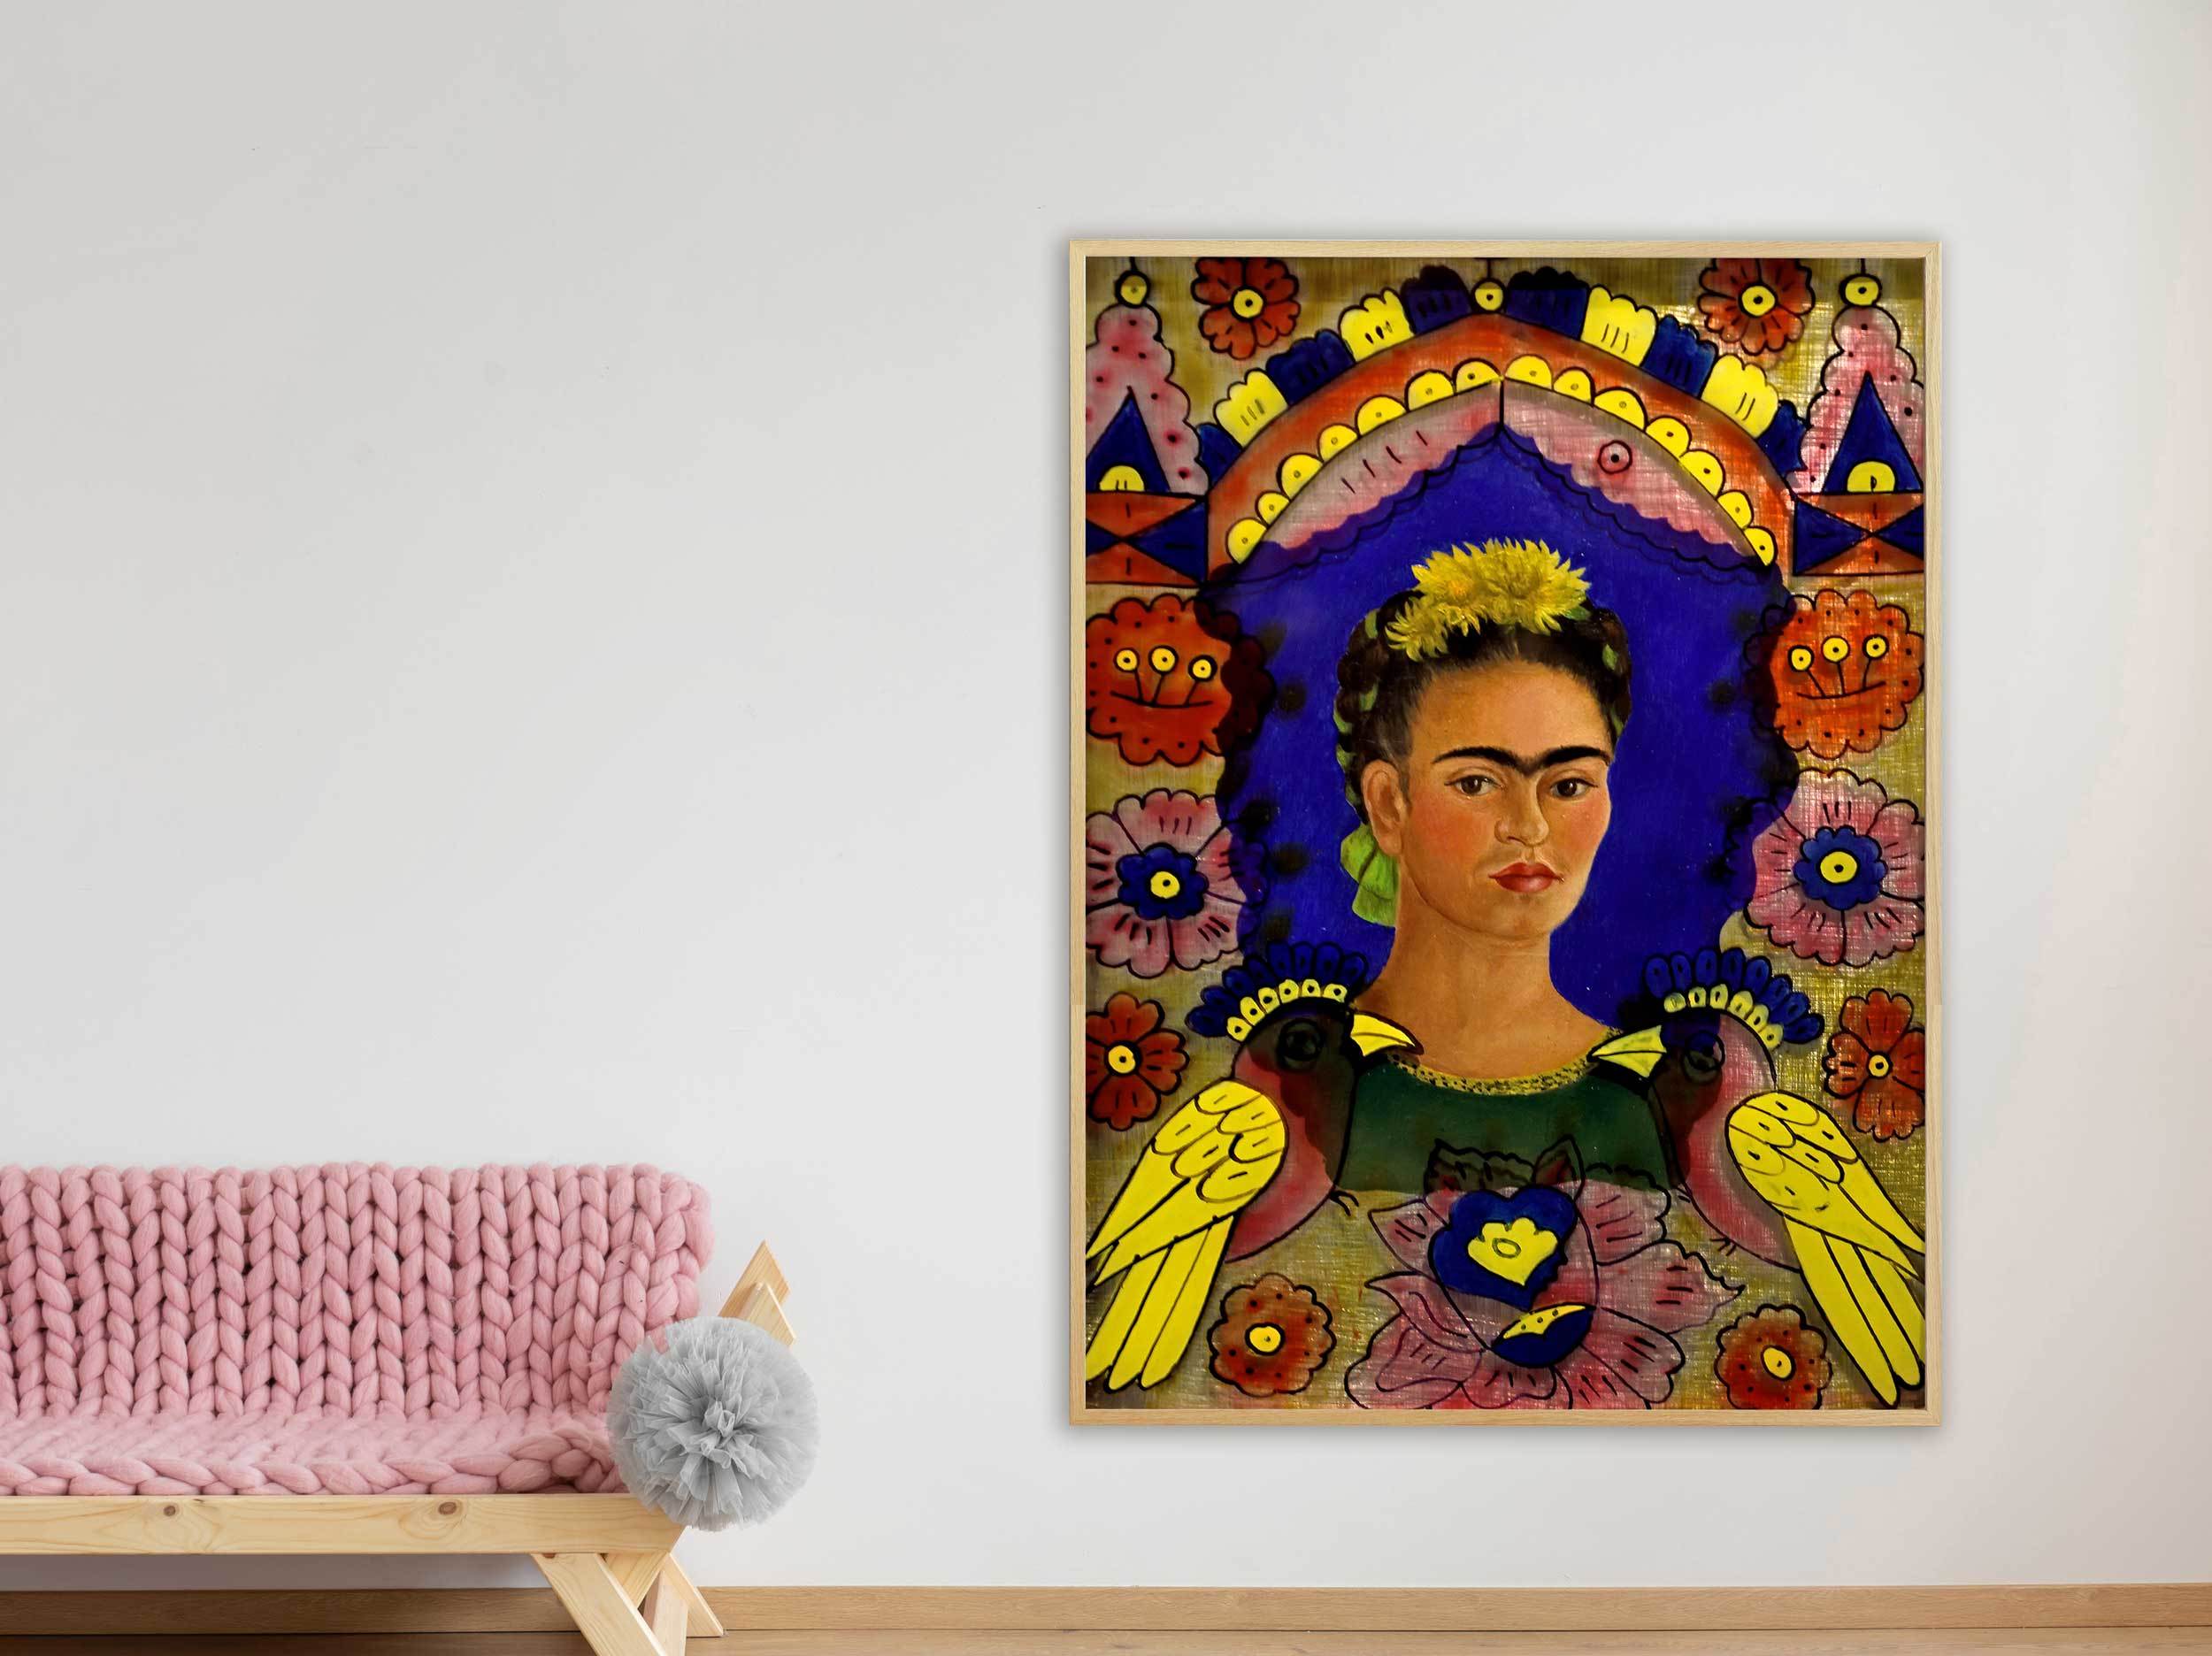 Frida Kahlo - The Frame, 1938, Bilderrahmen Eiche